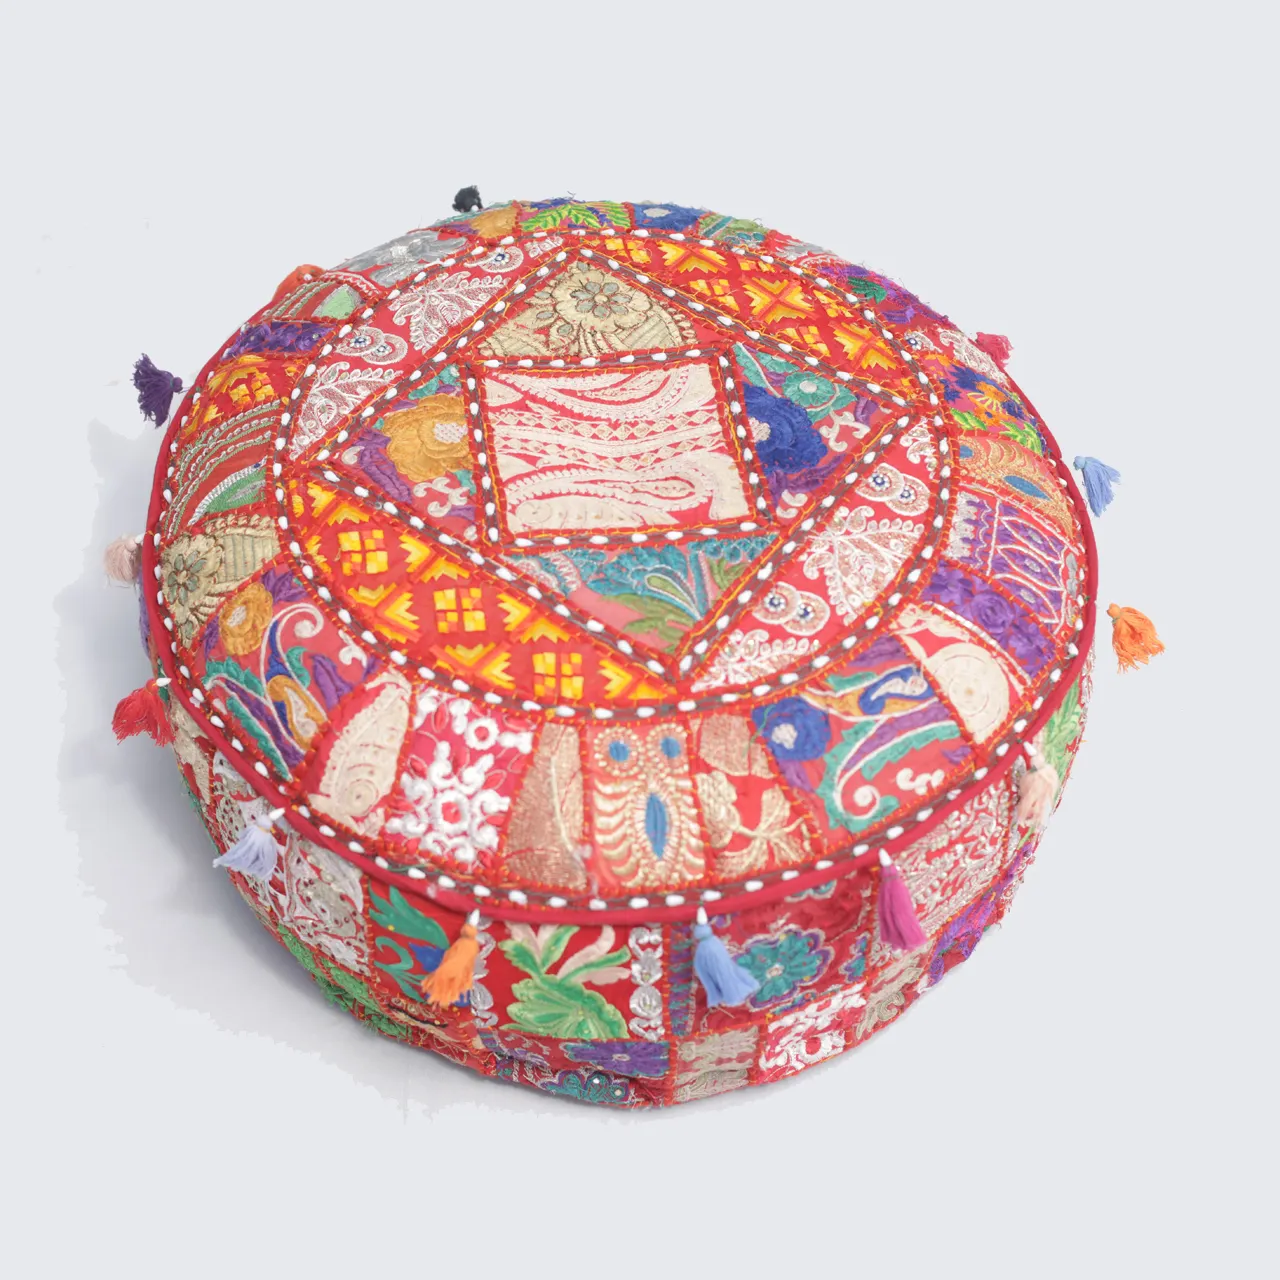 New Arrivals 2022 Boho Vintage Patchwork Pouffe Indian Cotton Decorative Embroidered Round Poufs Indian Ottoman Fair Trade Pouf